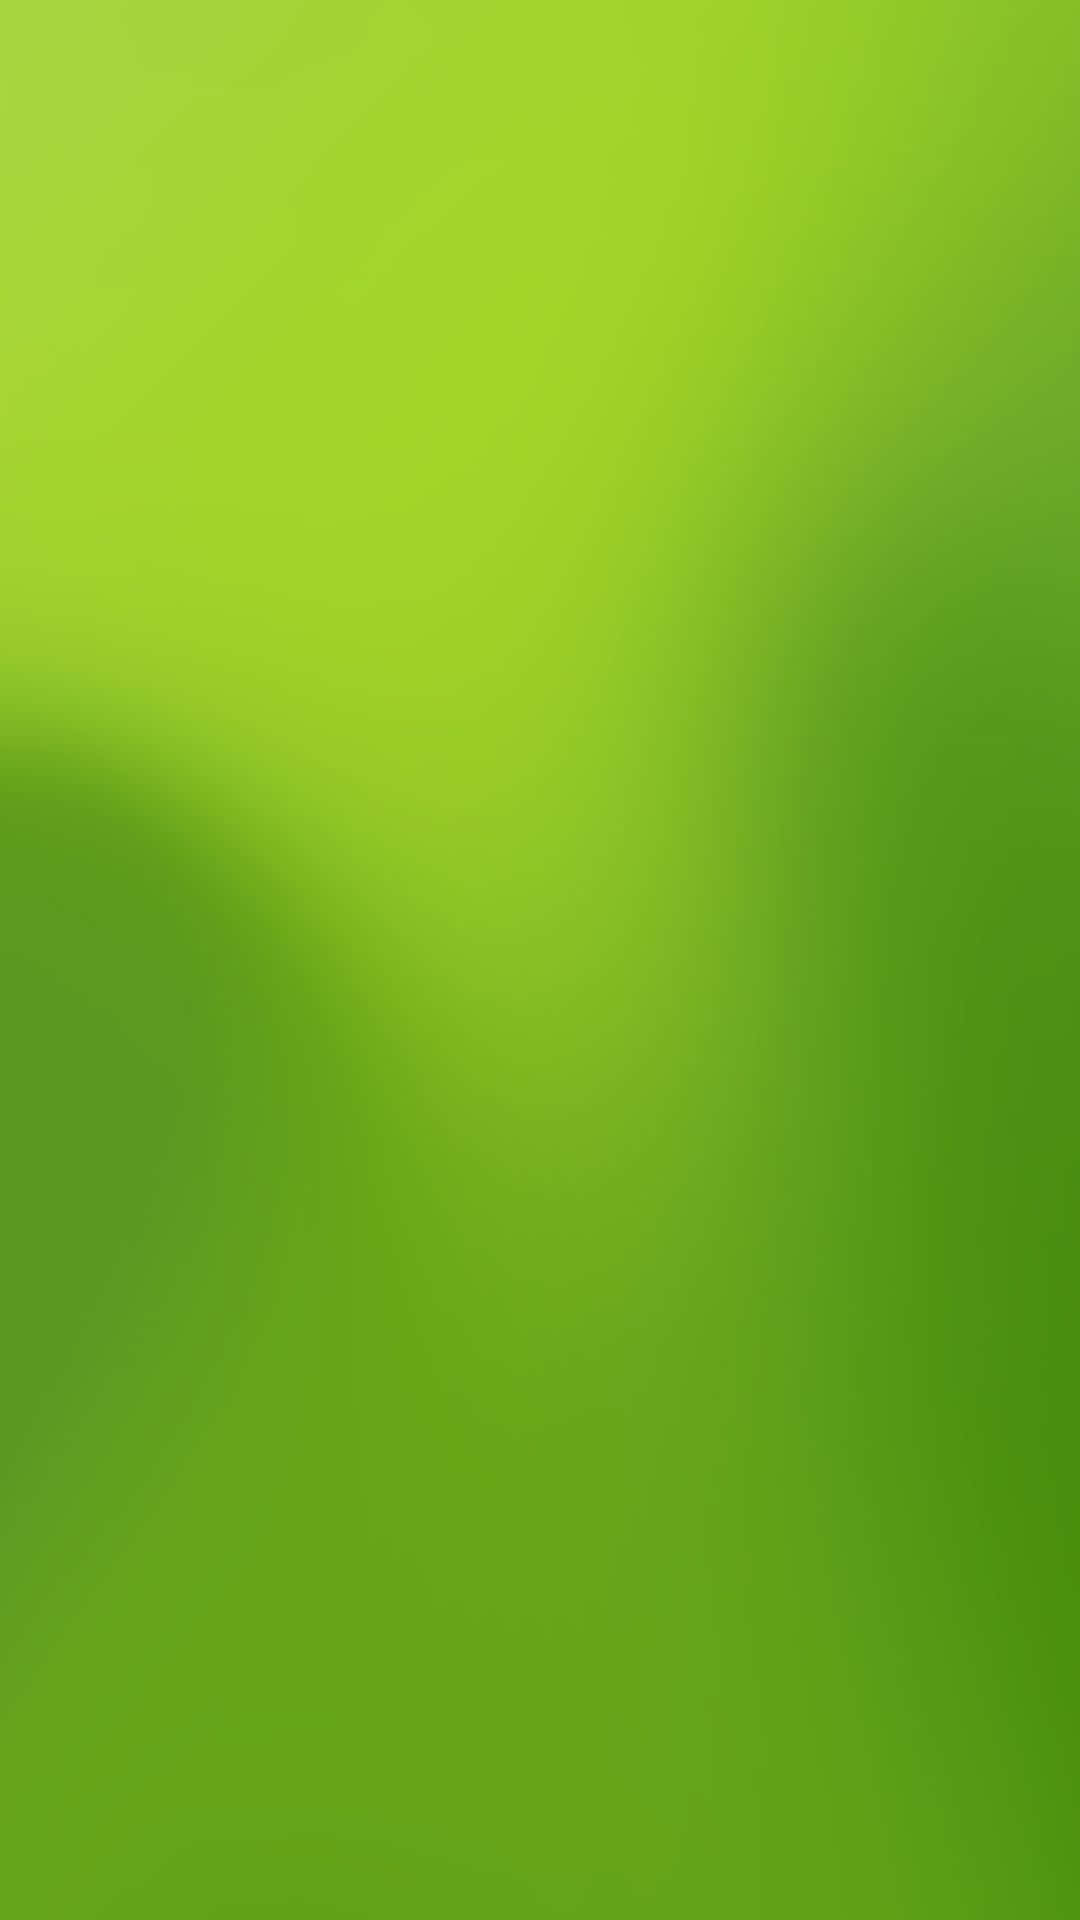 Vibrant green gradient background